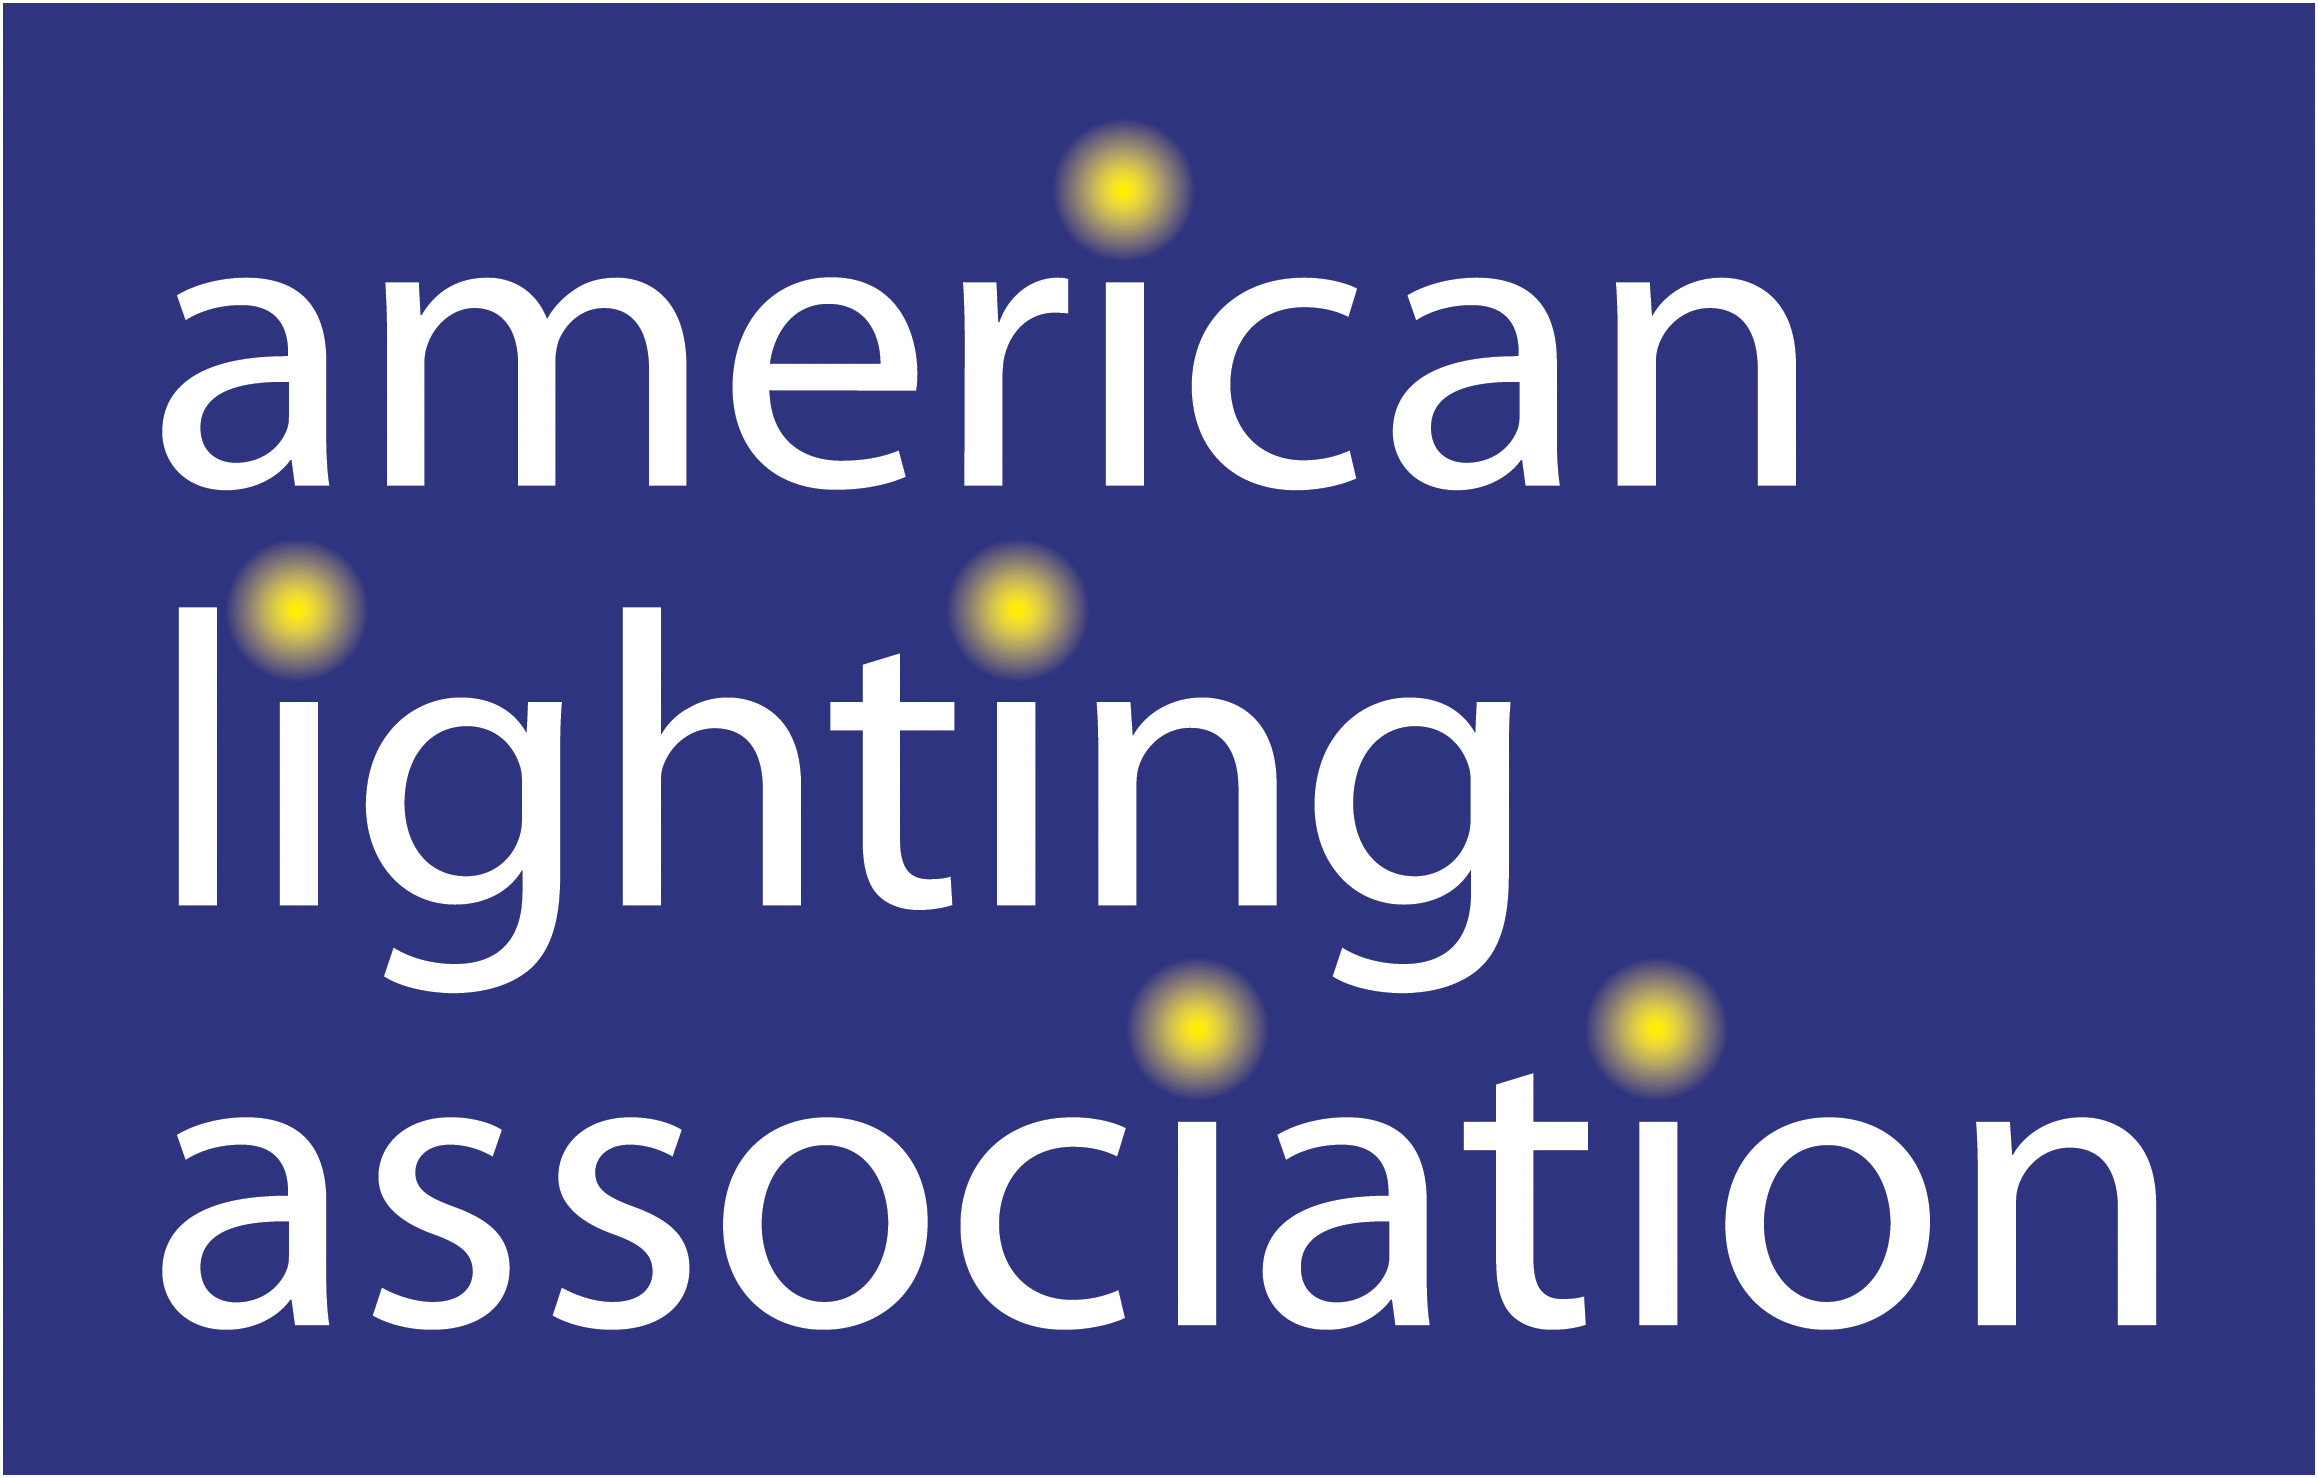 American Lighting Association